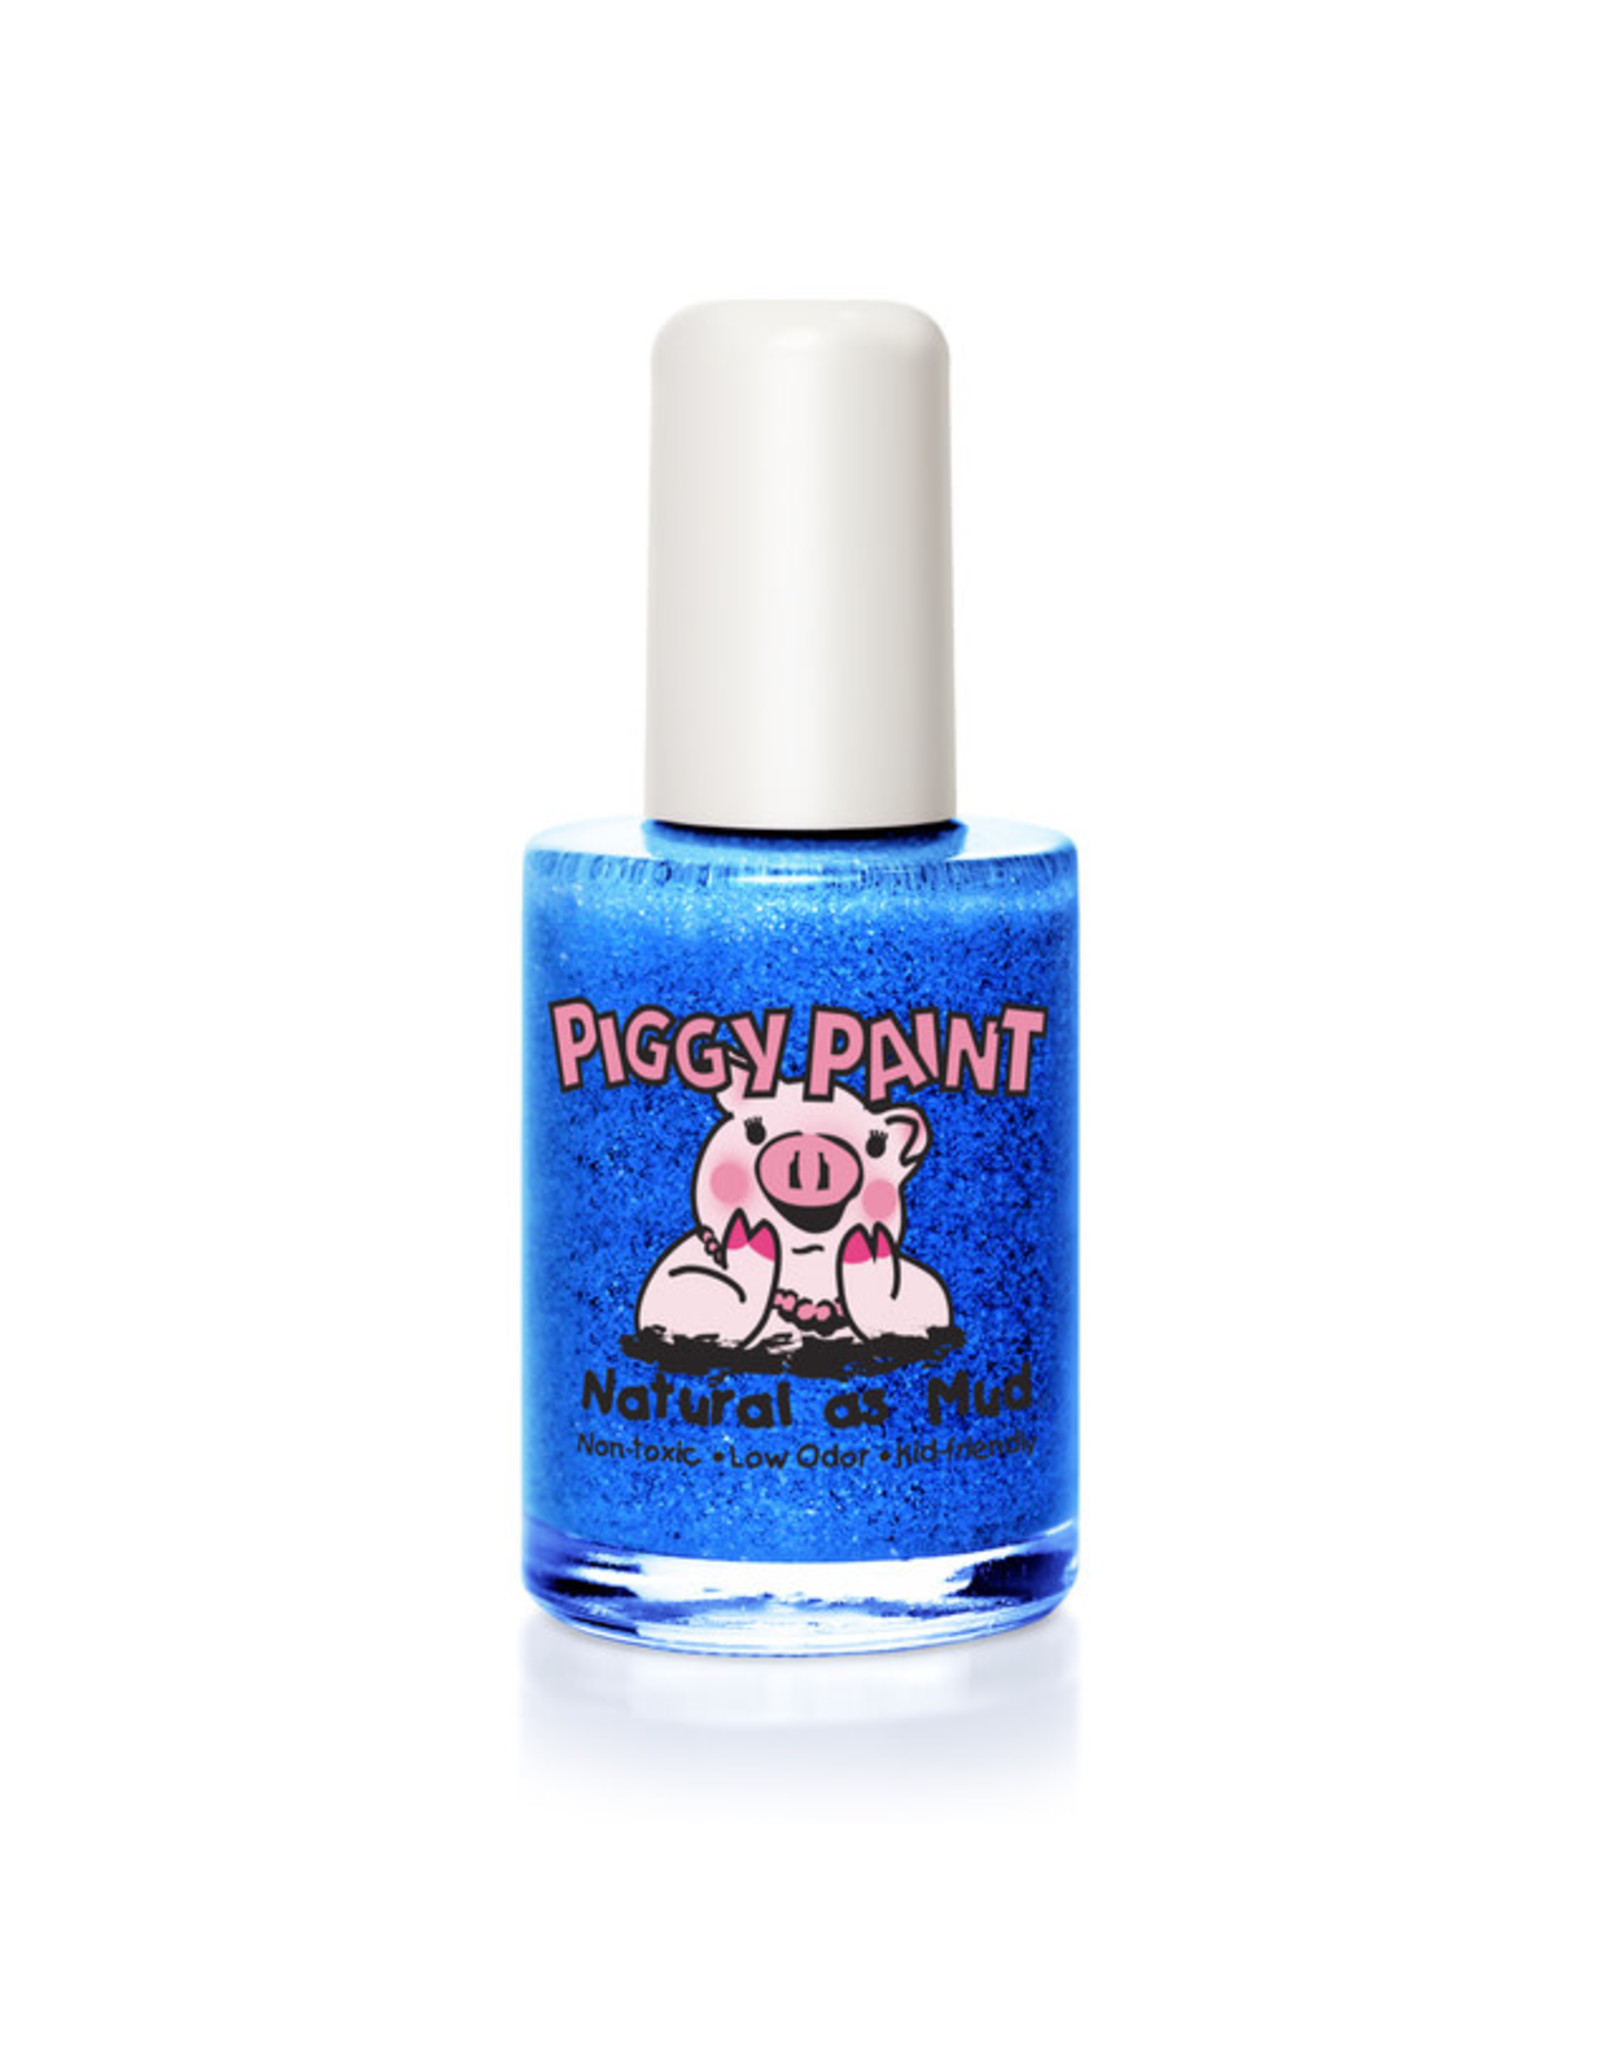 Piggy Paint Piggy Paint Mer-maid in the Shade